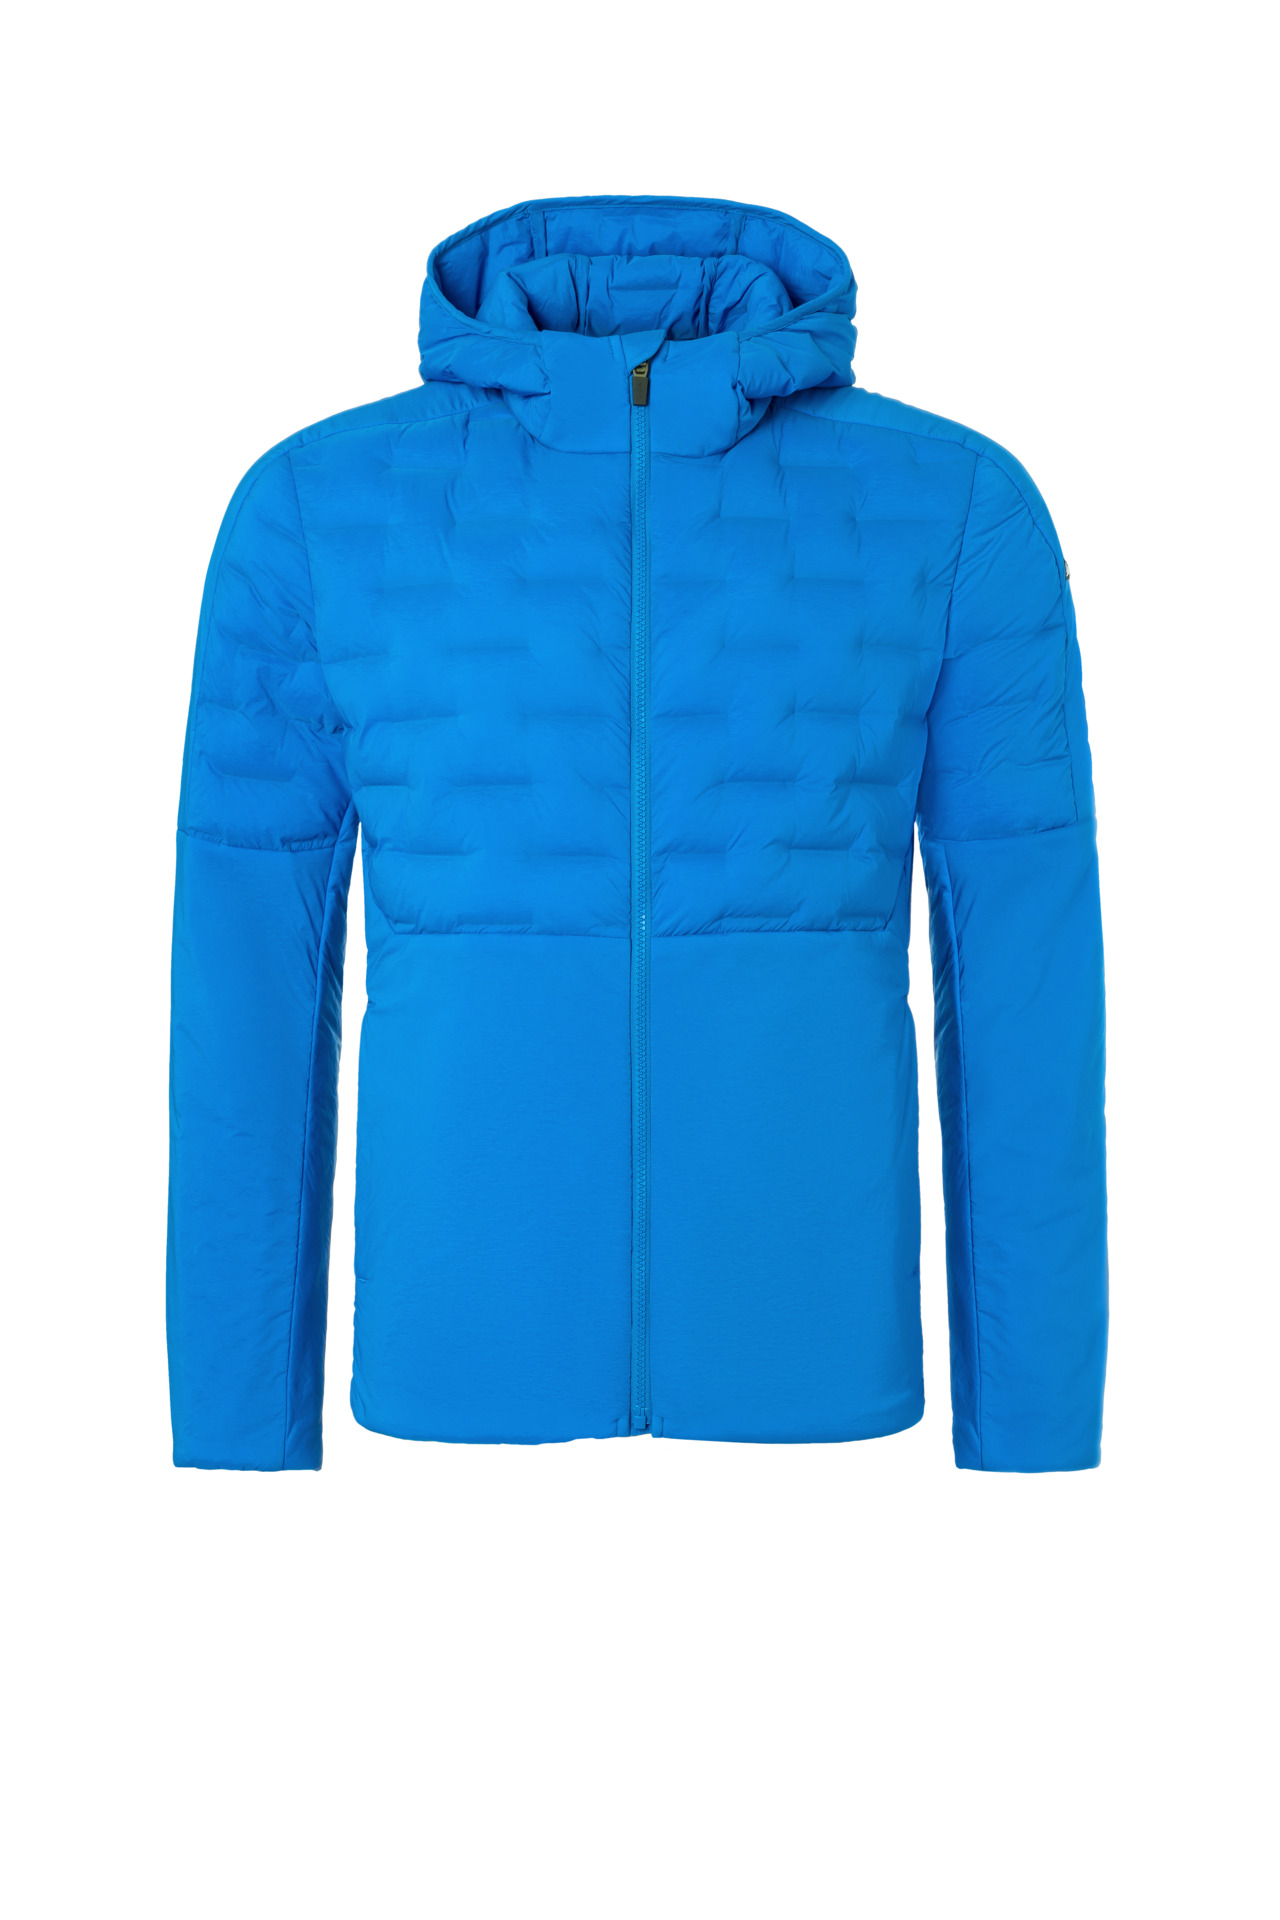 Kjus Men's Blackcomb Hooded Insulation Jacket - Aspen Ski Shop Hamilton ...